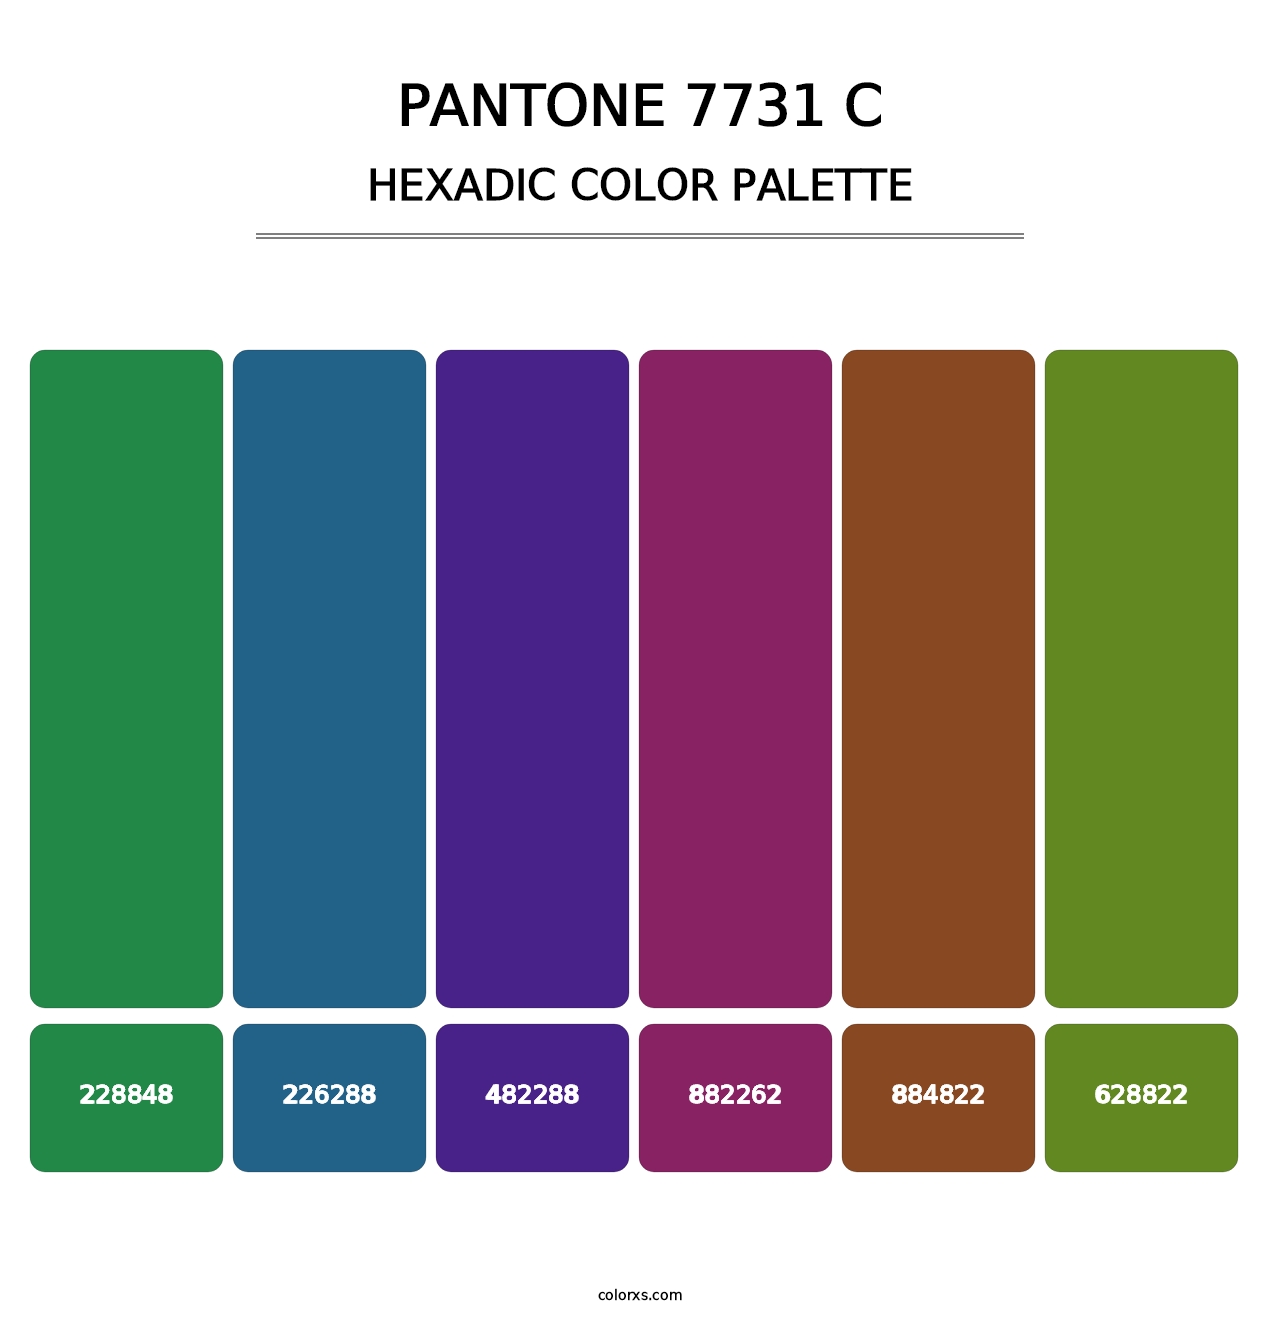 PANTONE 7731 C - Hexadic Color Palette